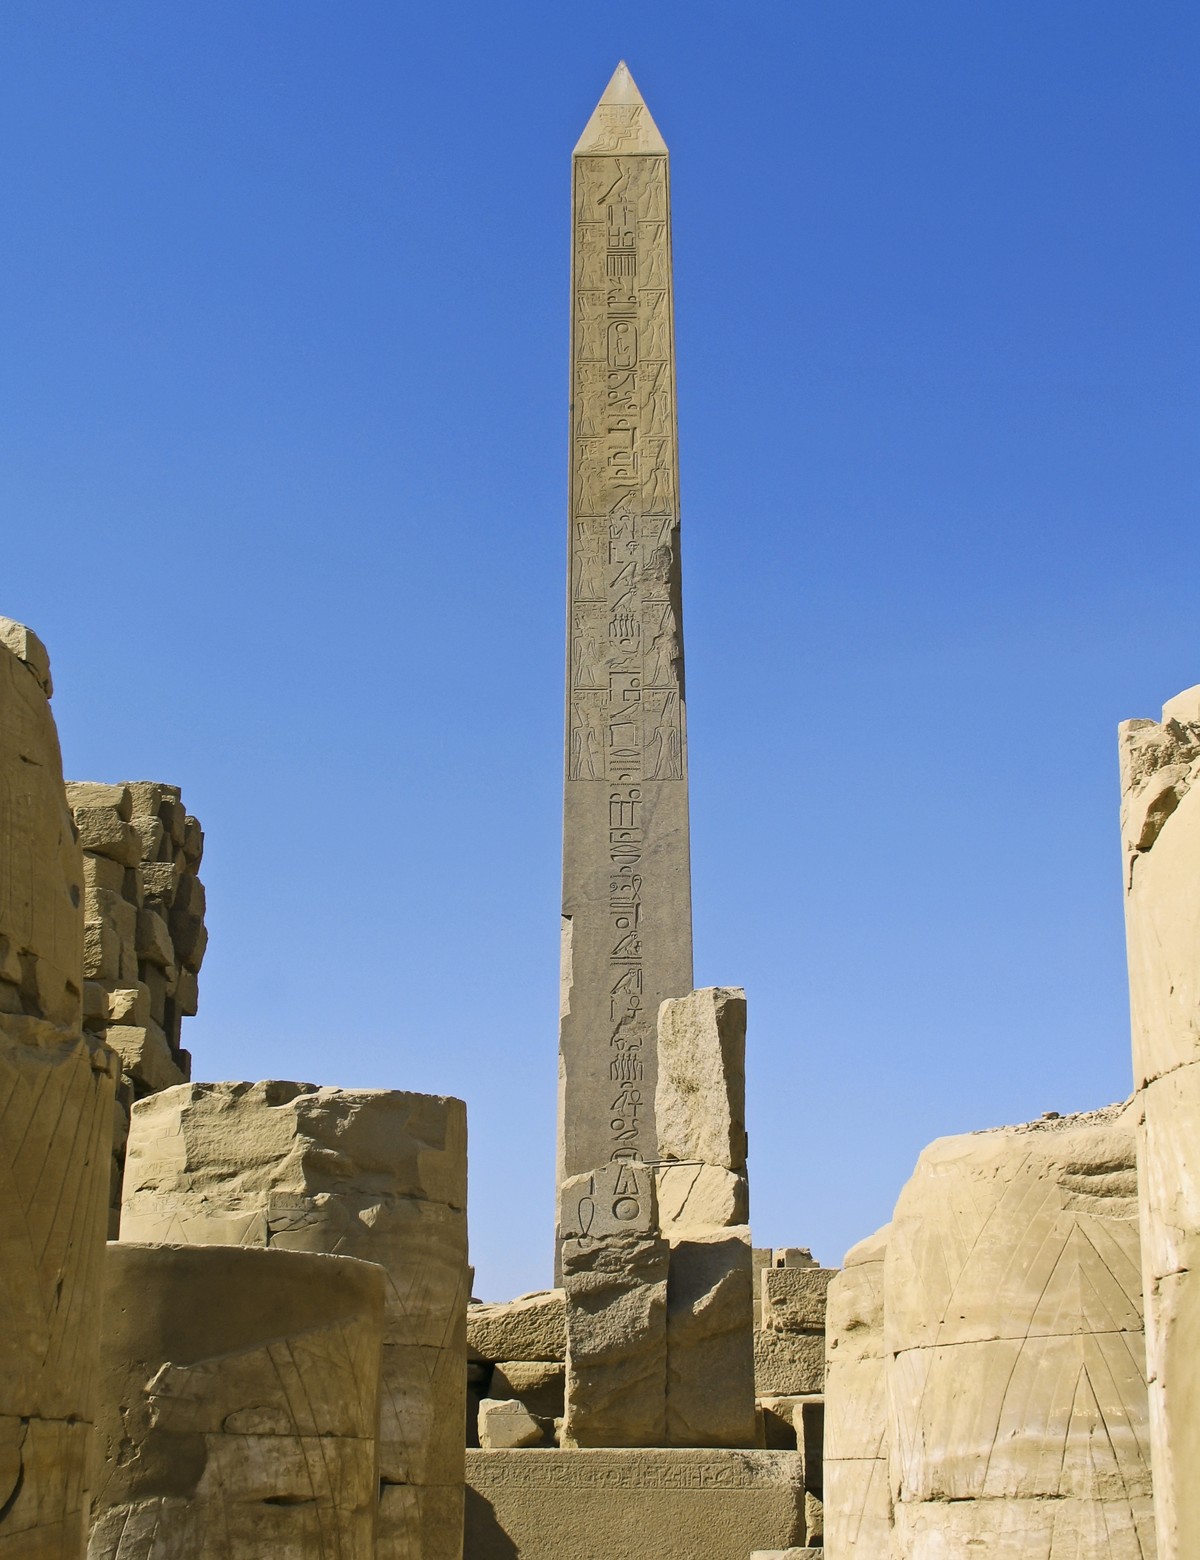 Near Eastern Archaeology: The Paris Obelisk